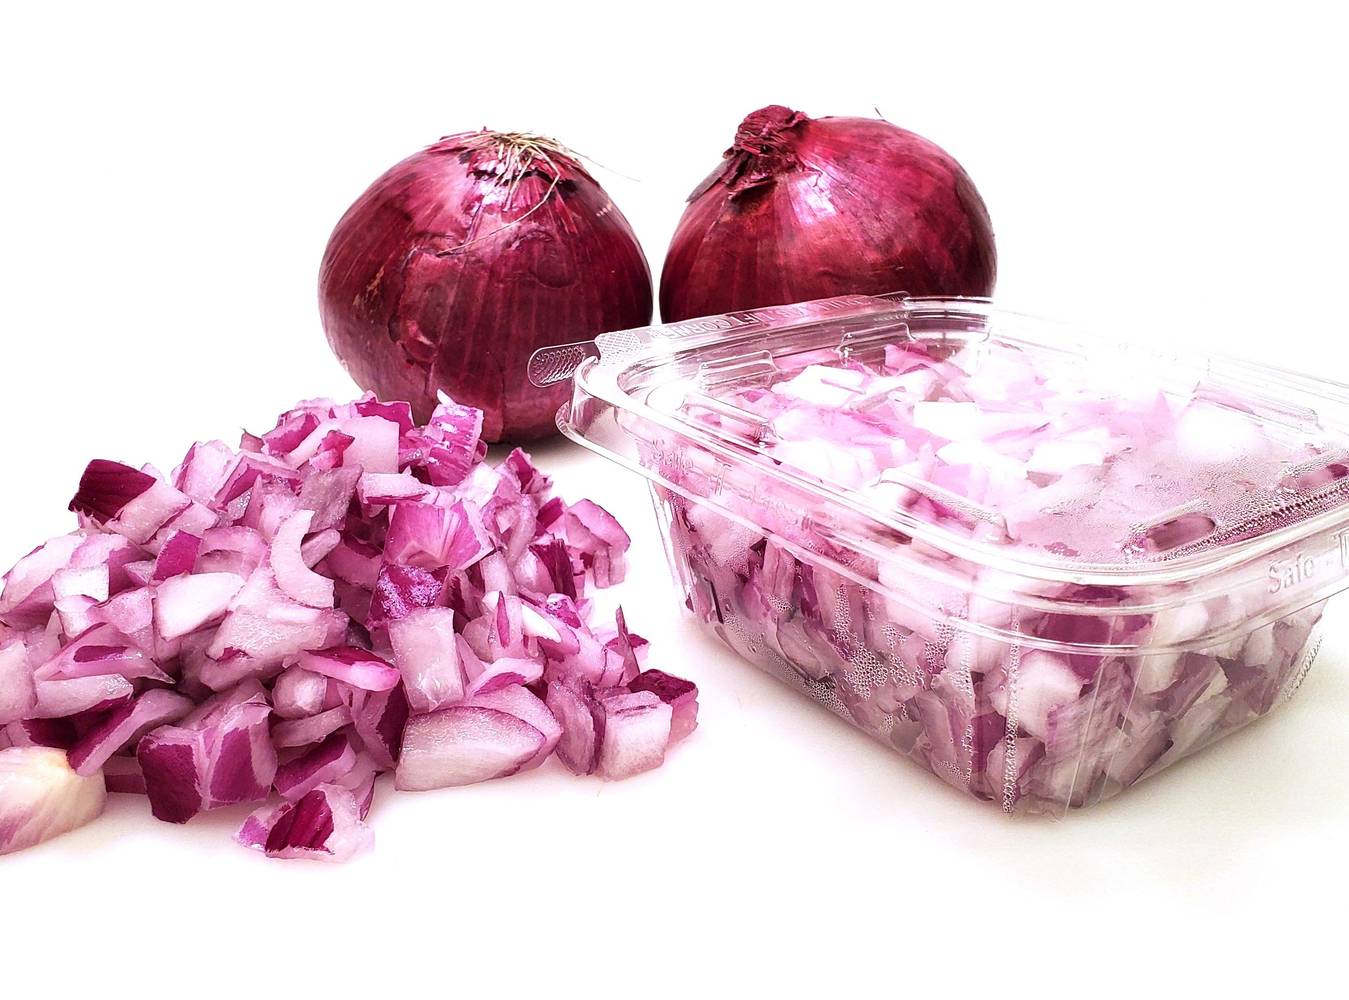 Diced Onions